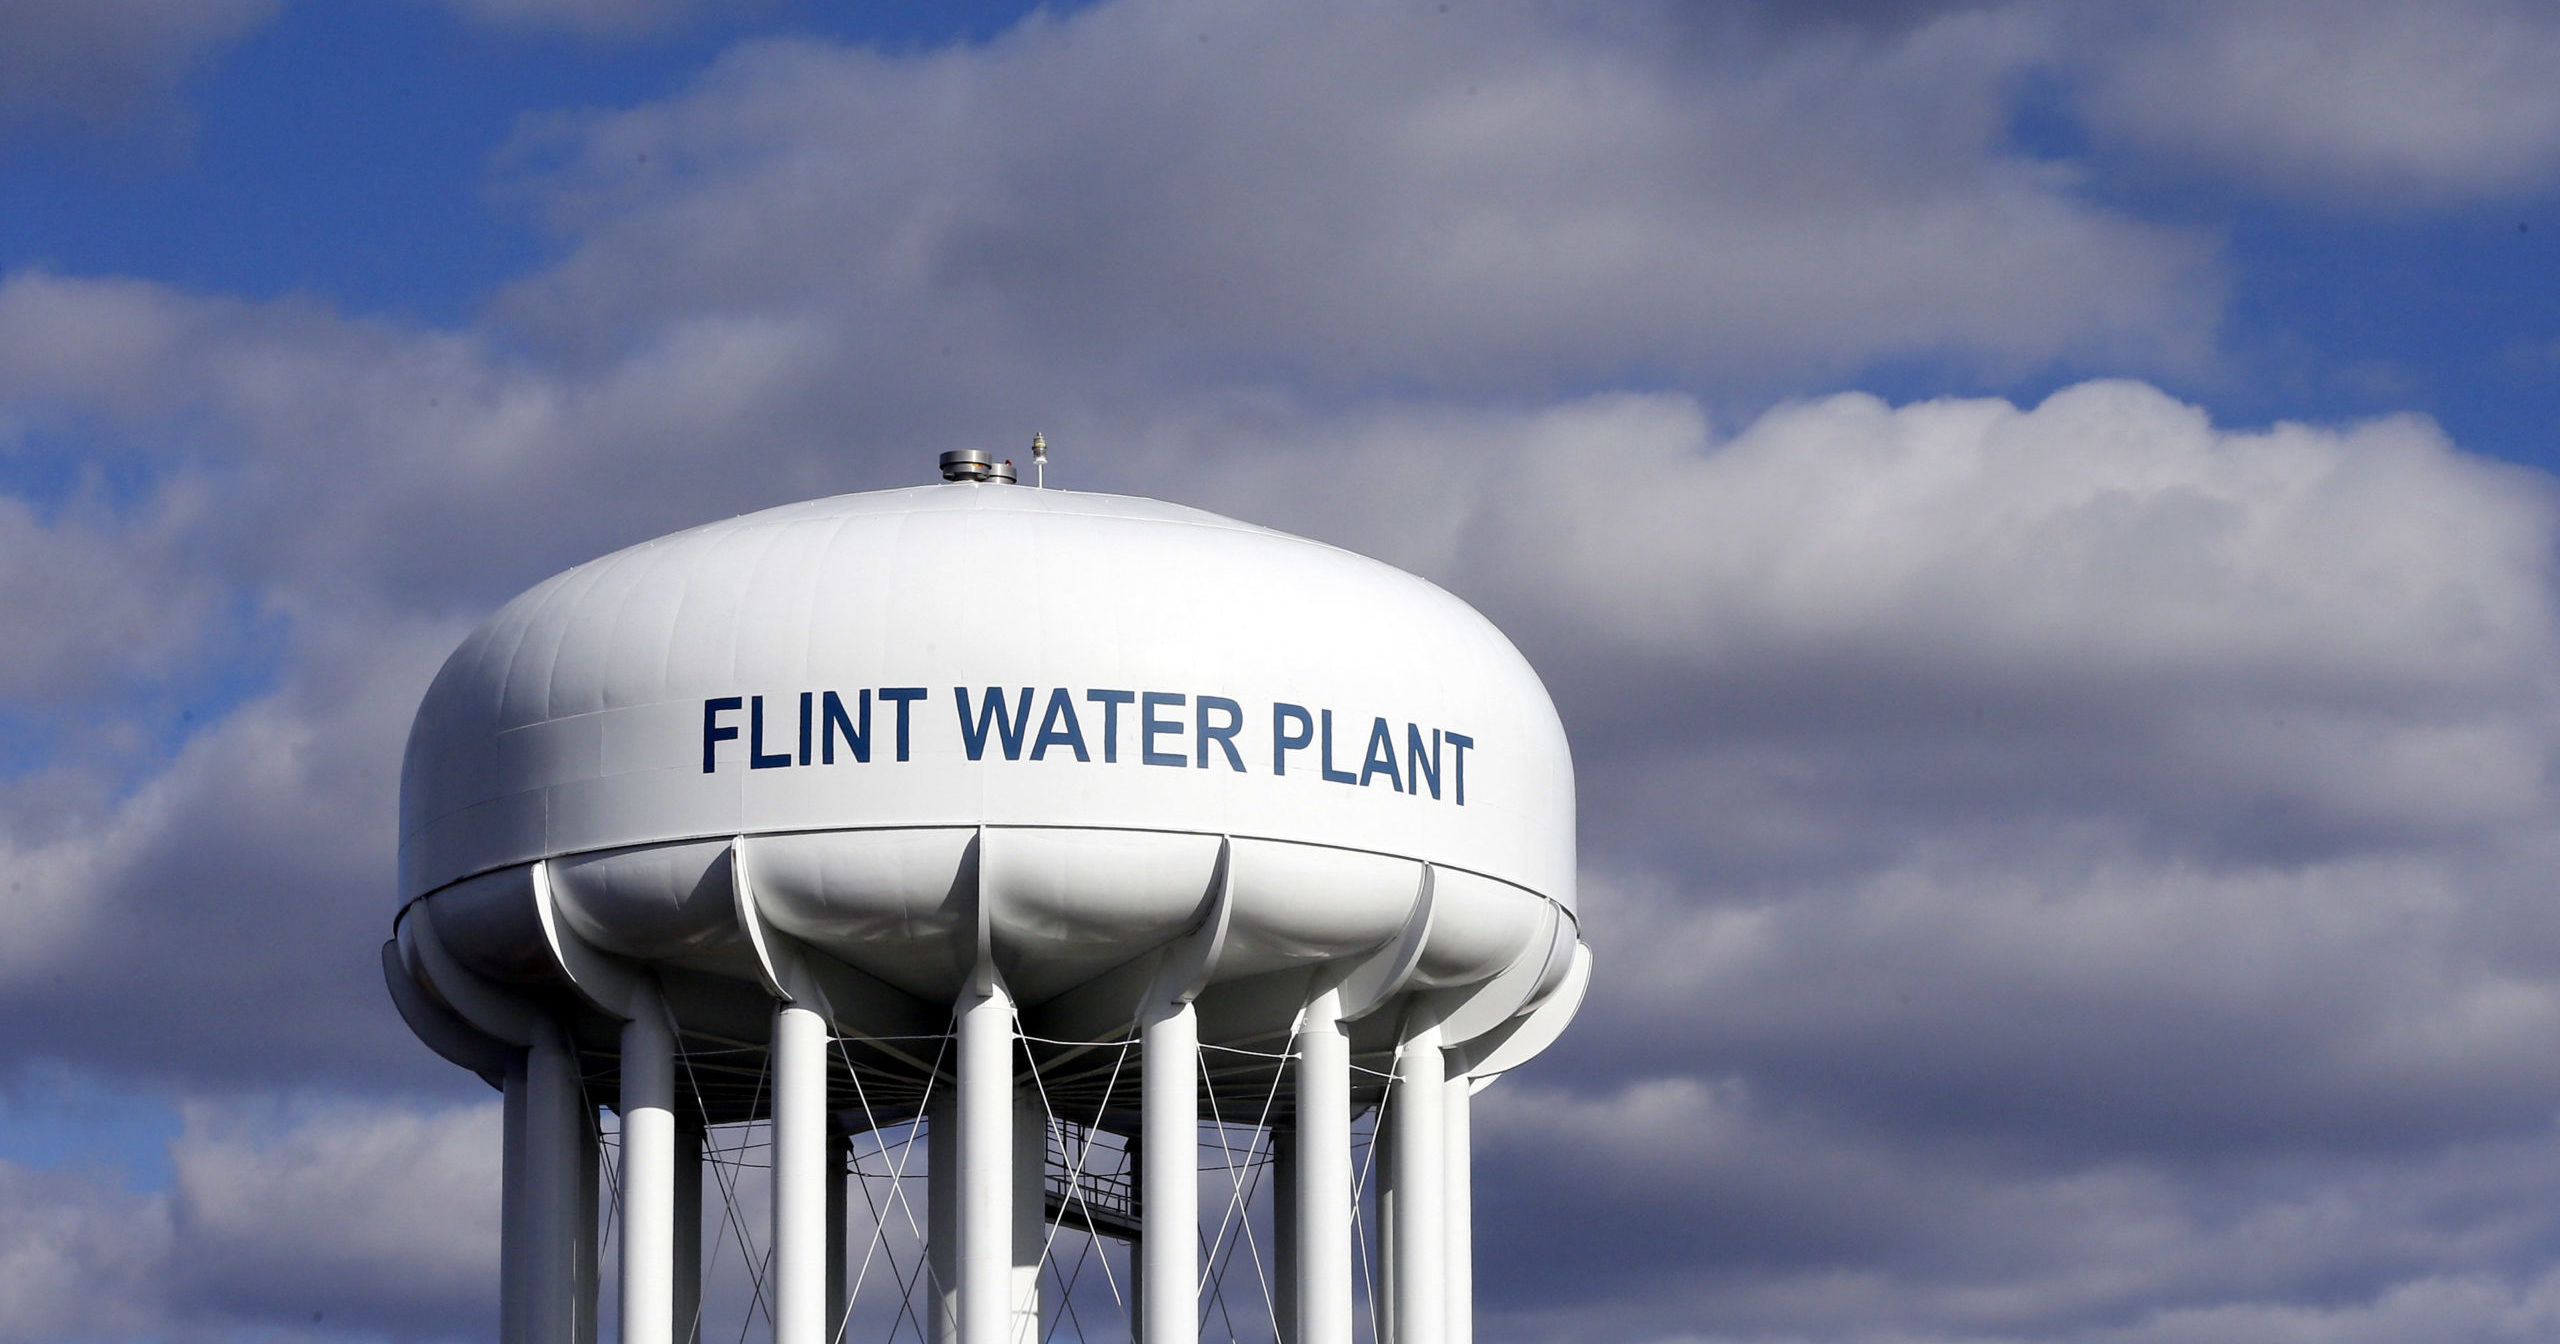 The Flint Water Plant water tower is seen in Flint, Michigan, on March 21, 2016.